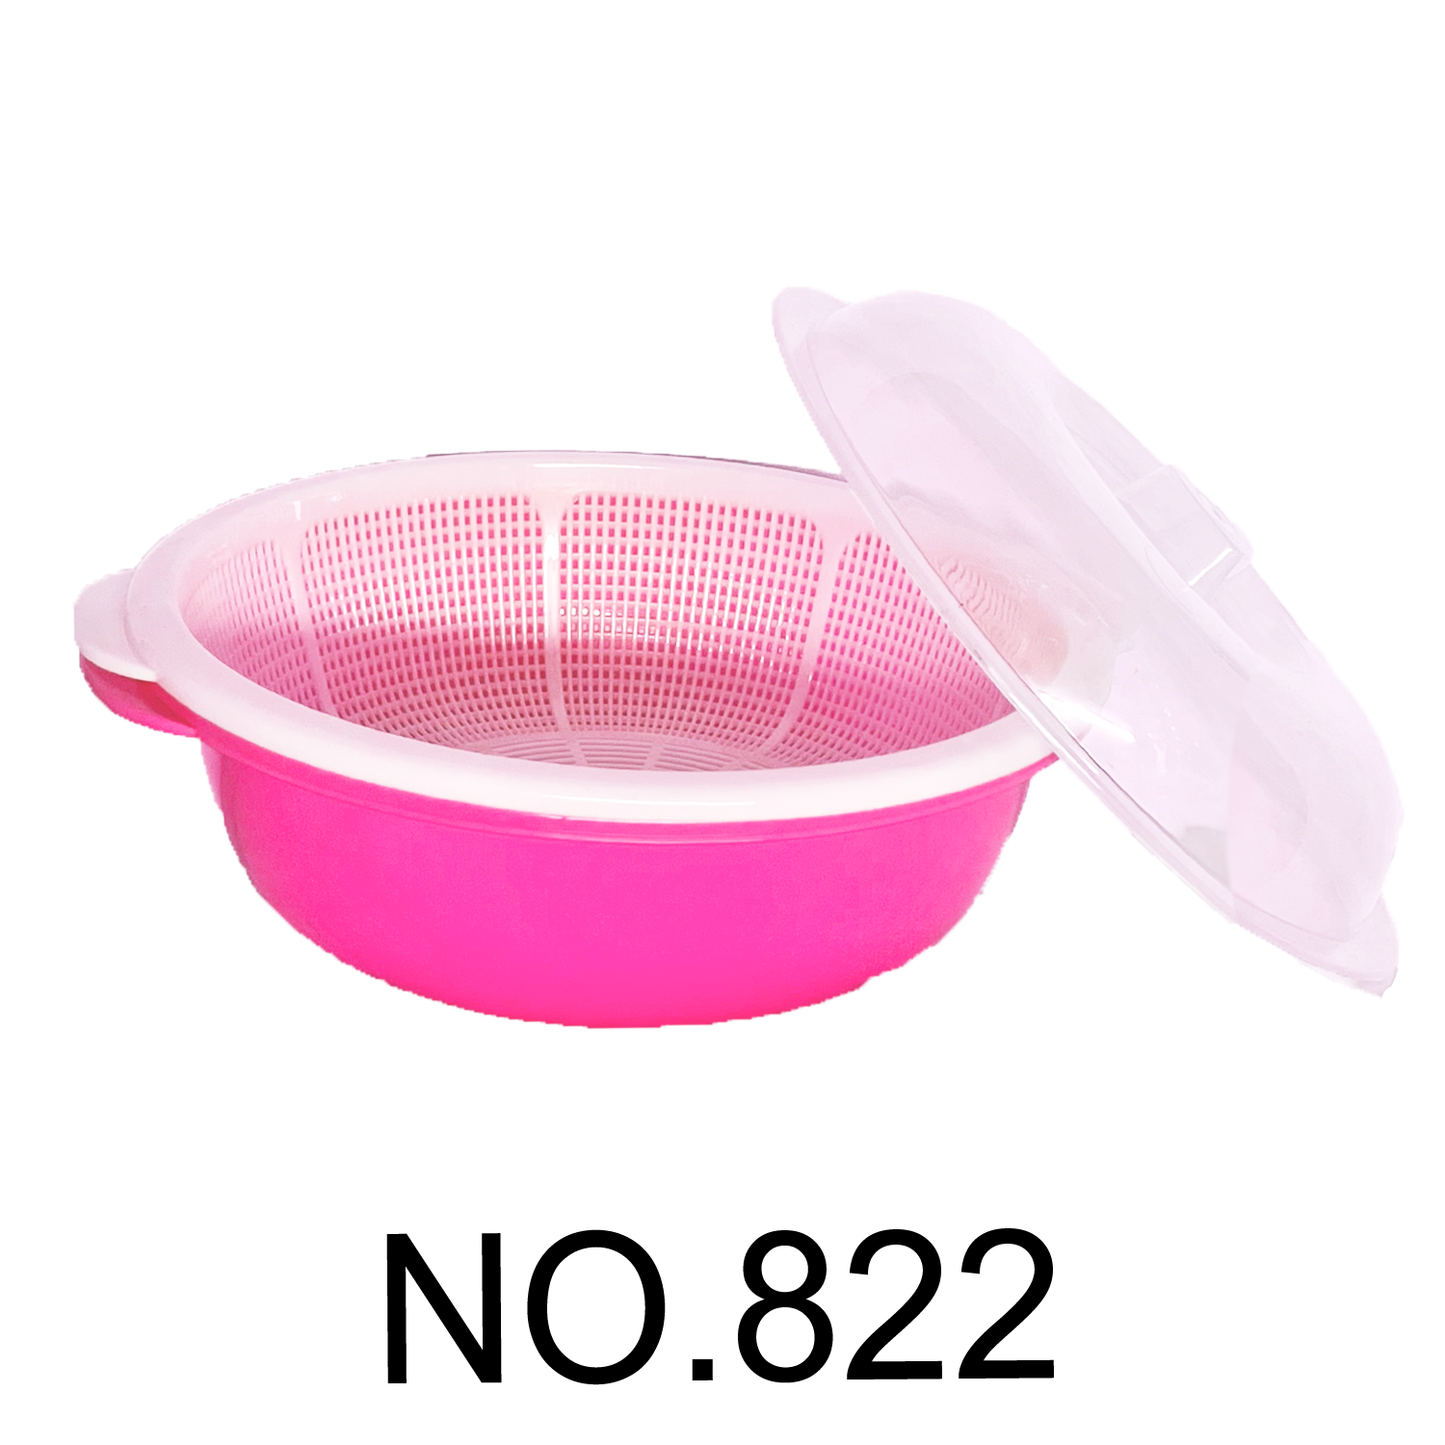 5L Pink Mixing Bowl w/ Lid